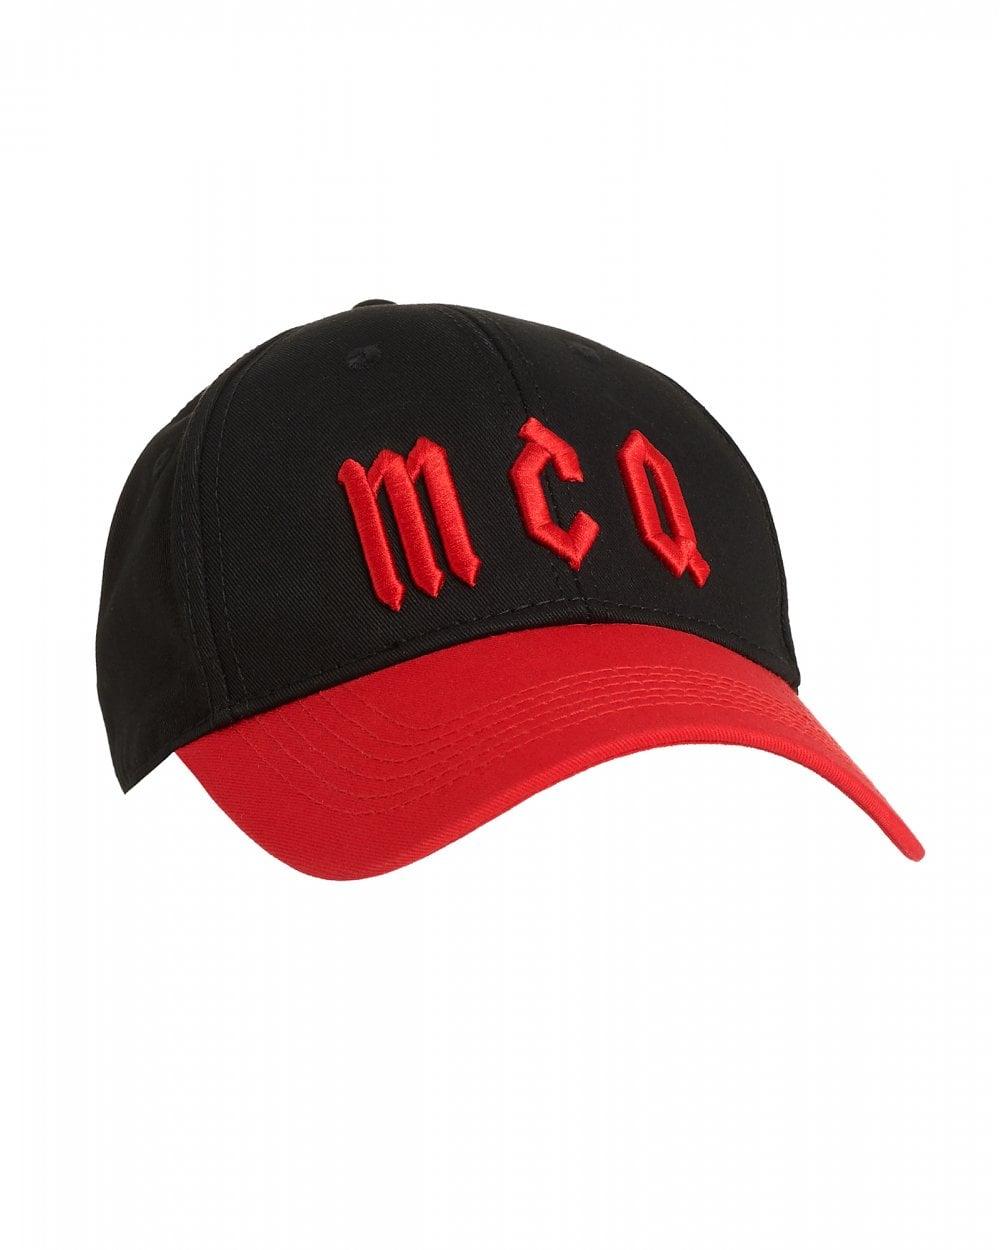 Red Cap Logo - McQ by Alexander McQueen Mens Logo Baseball Hat, Black Red Cotton Cap